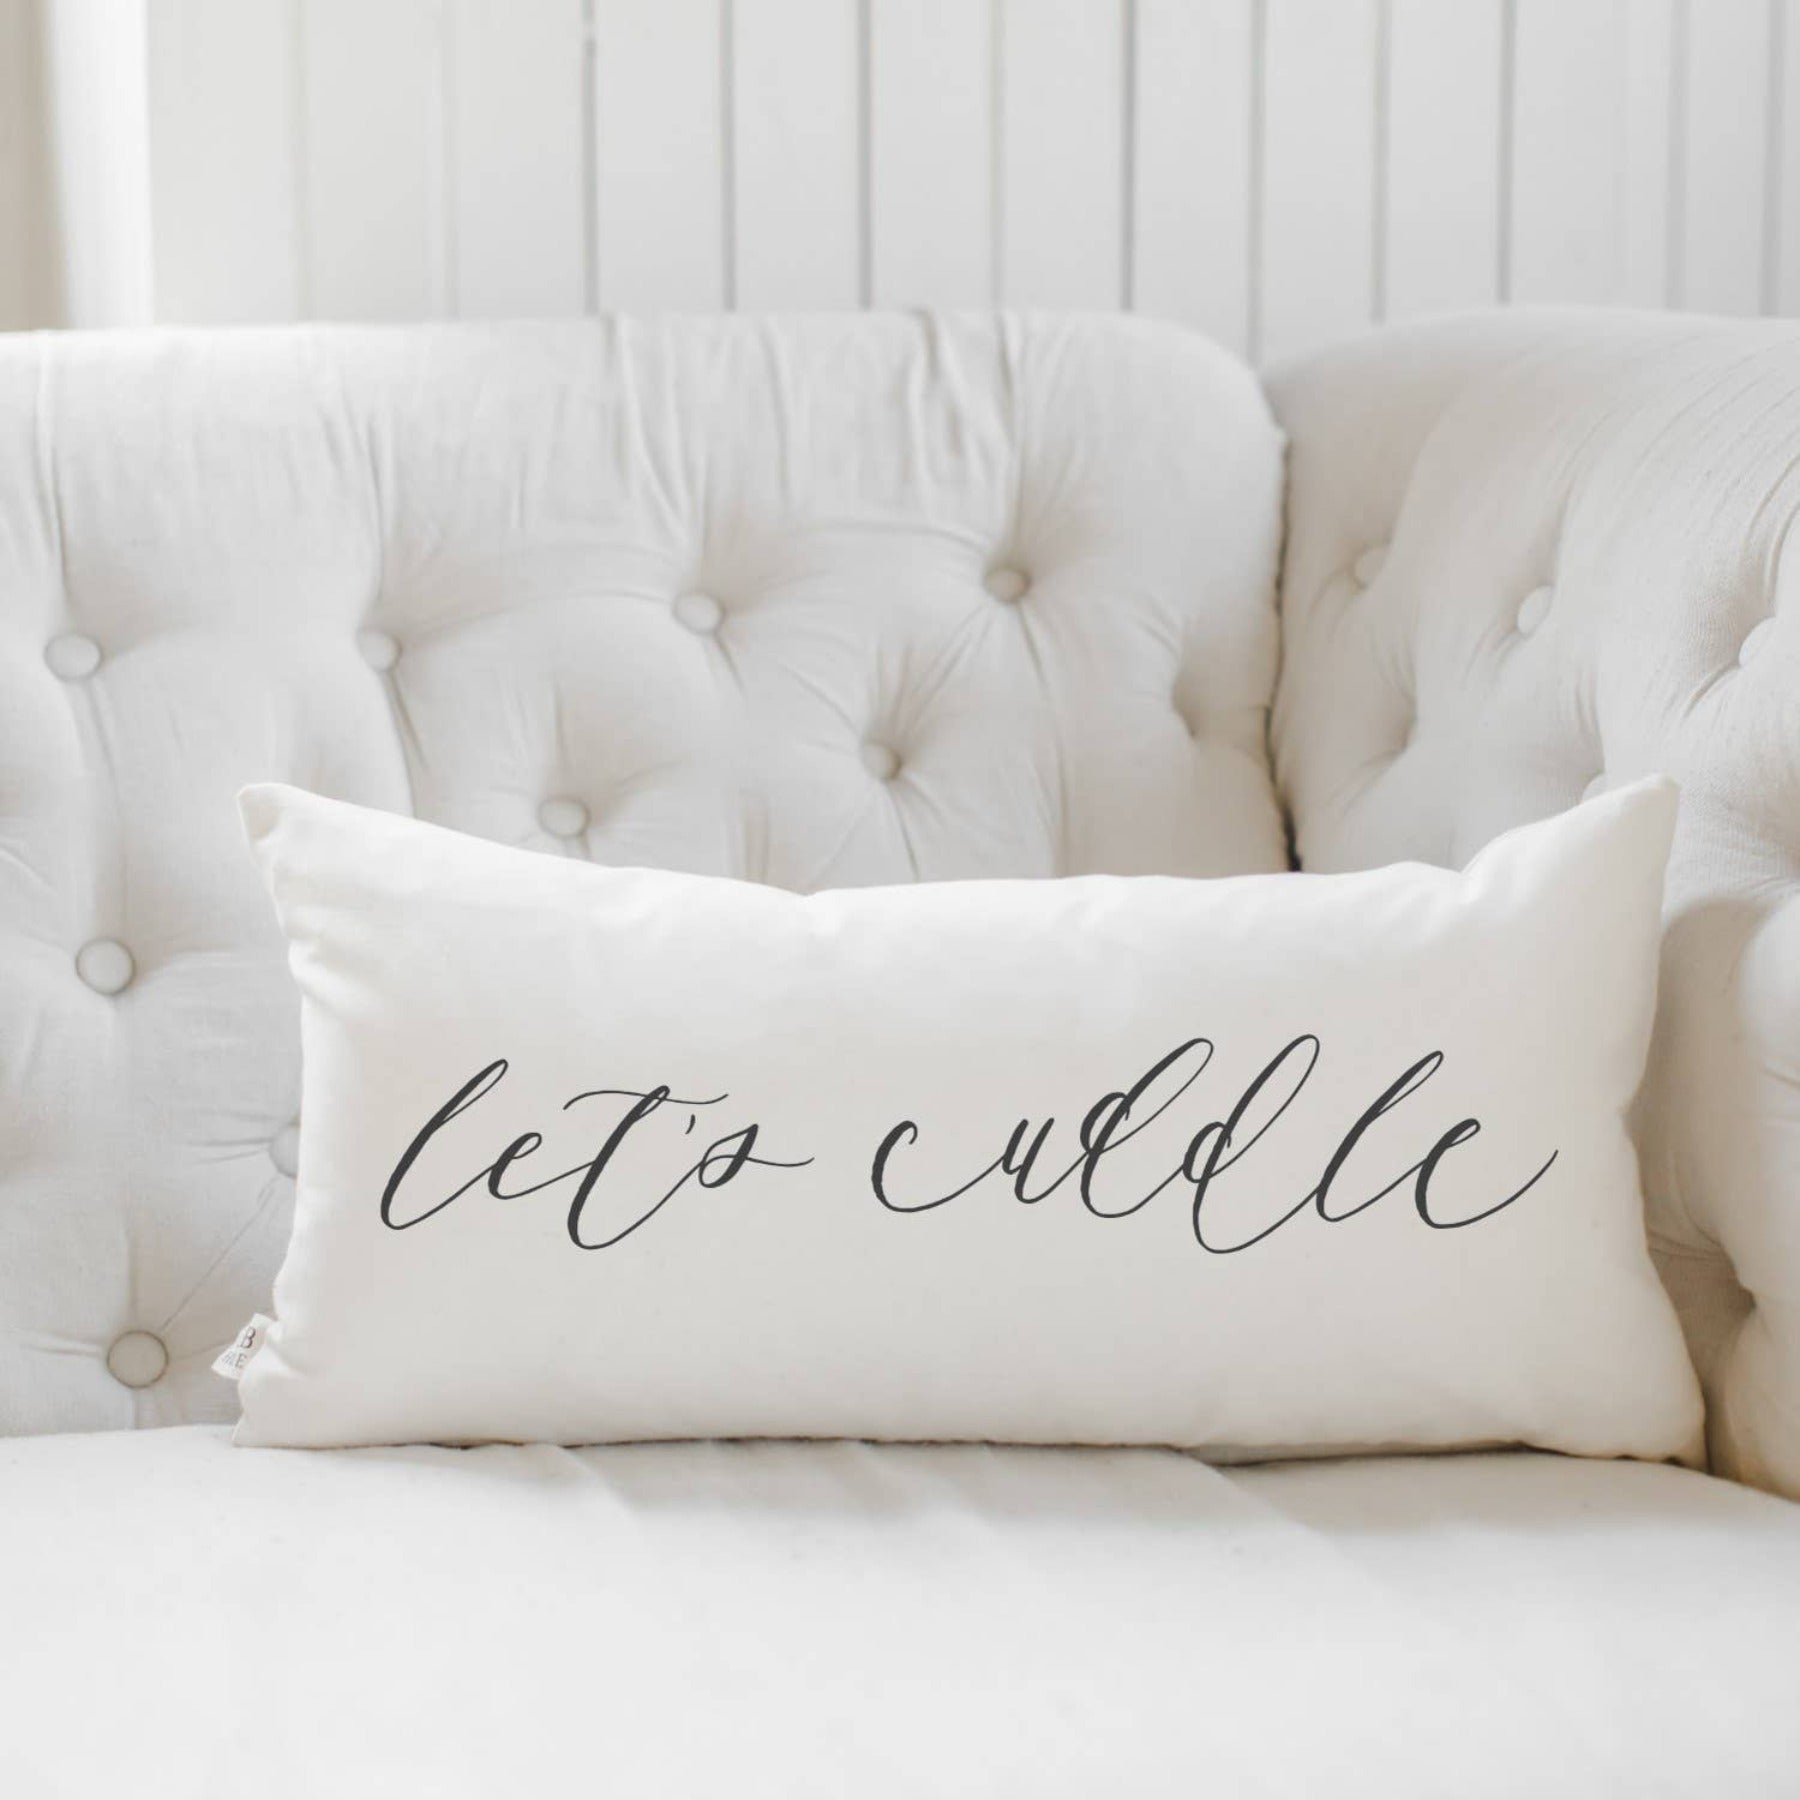 Let's Cuddle Lumbar Pillow Cover